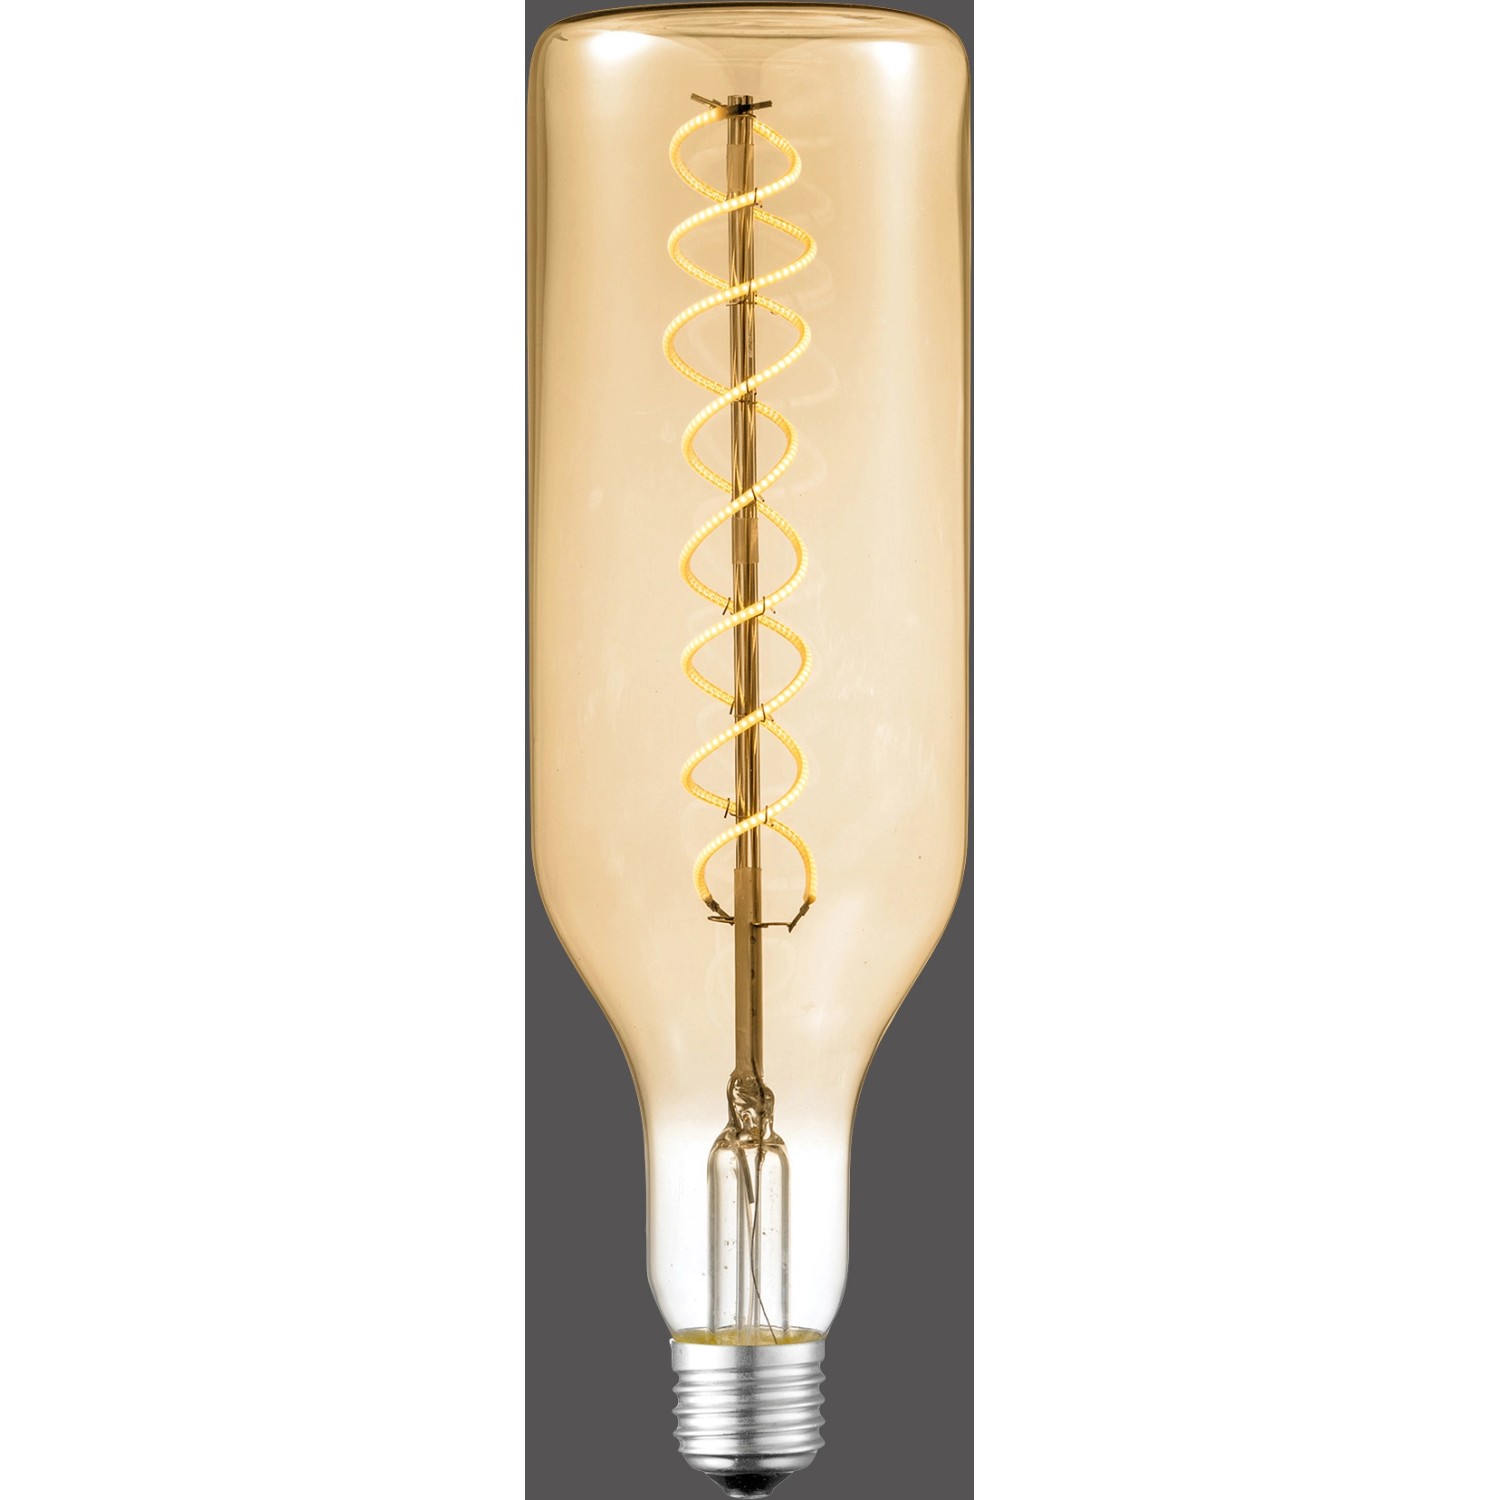 Just Light. LED-Leuchtmittel E27 4 W Warmweiß 270 lm 24,5 x 7,5 cm (H x Ø)